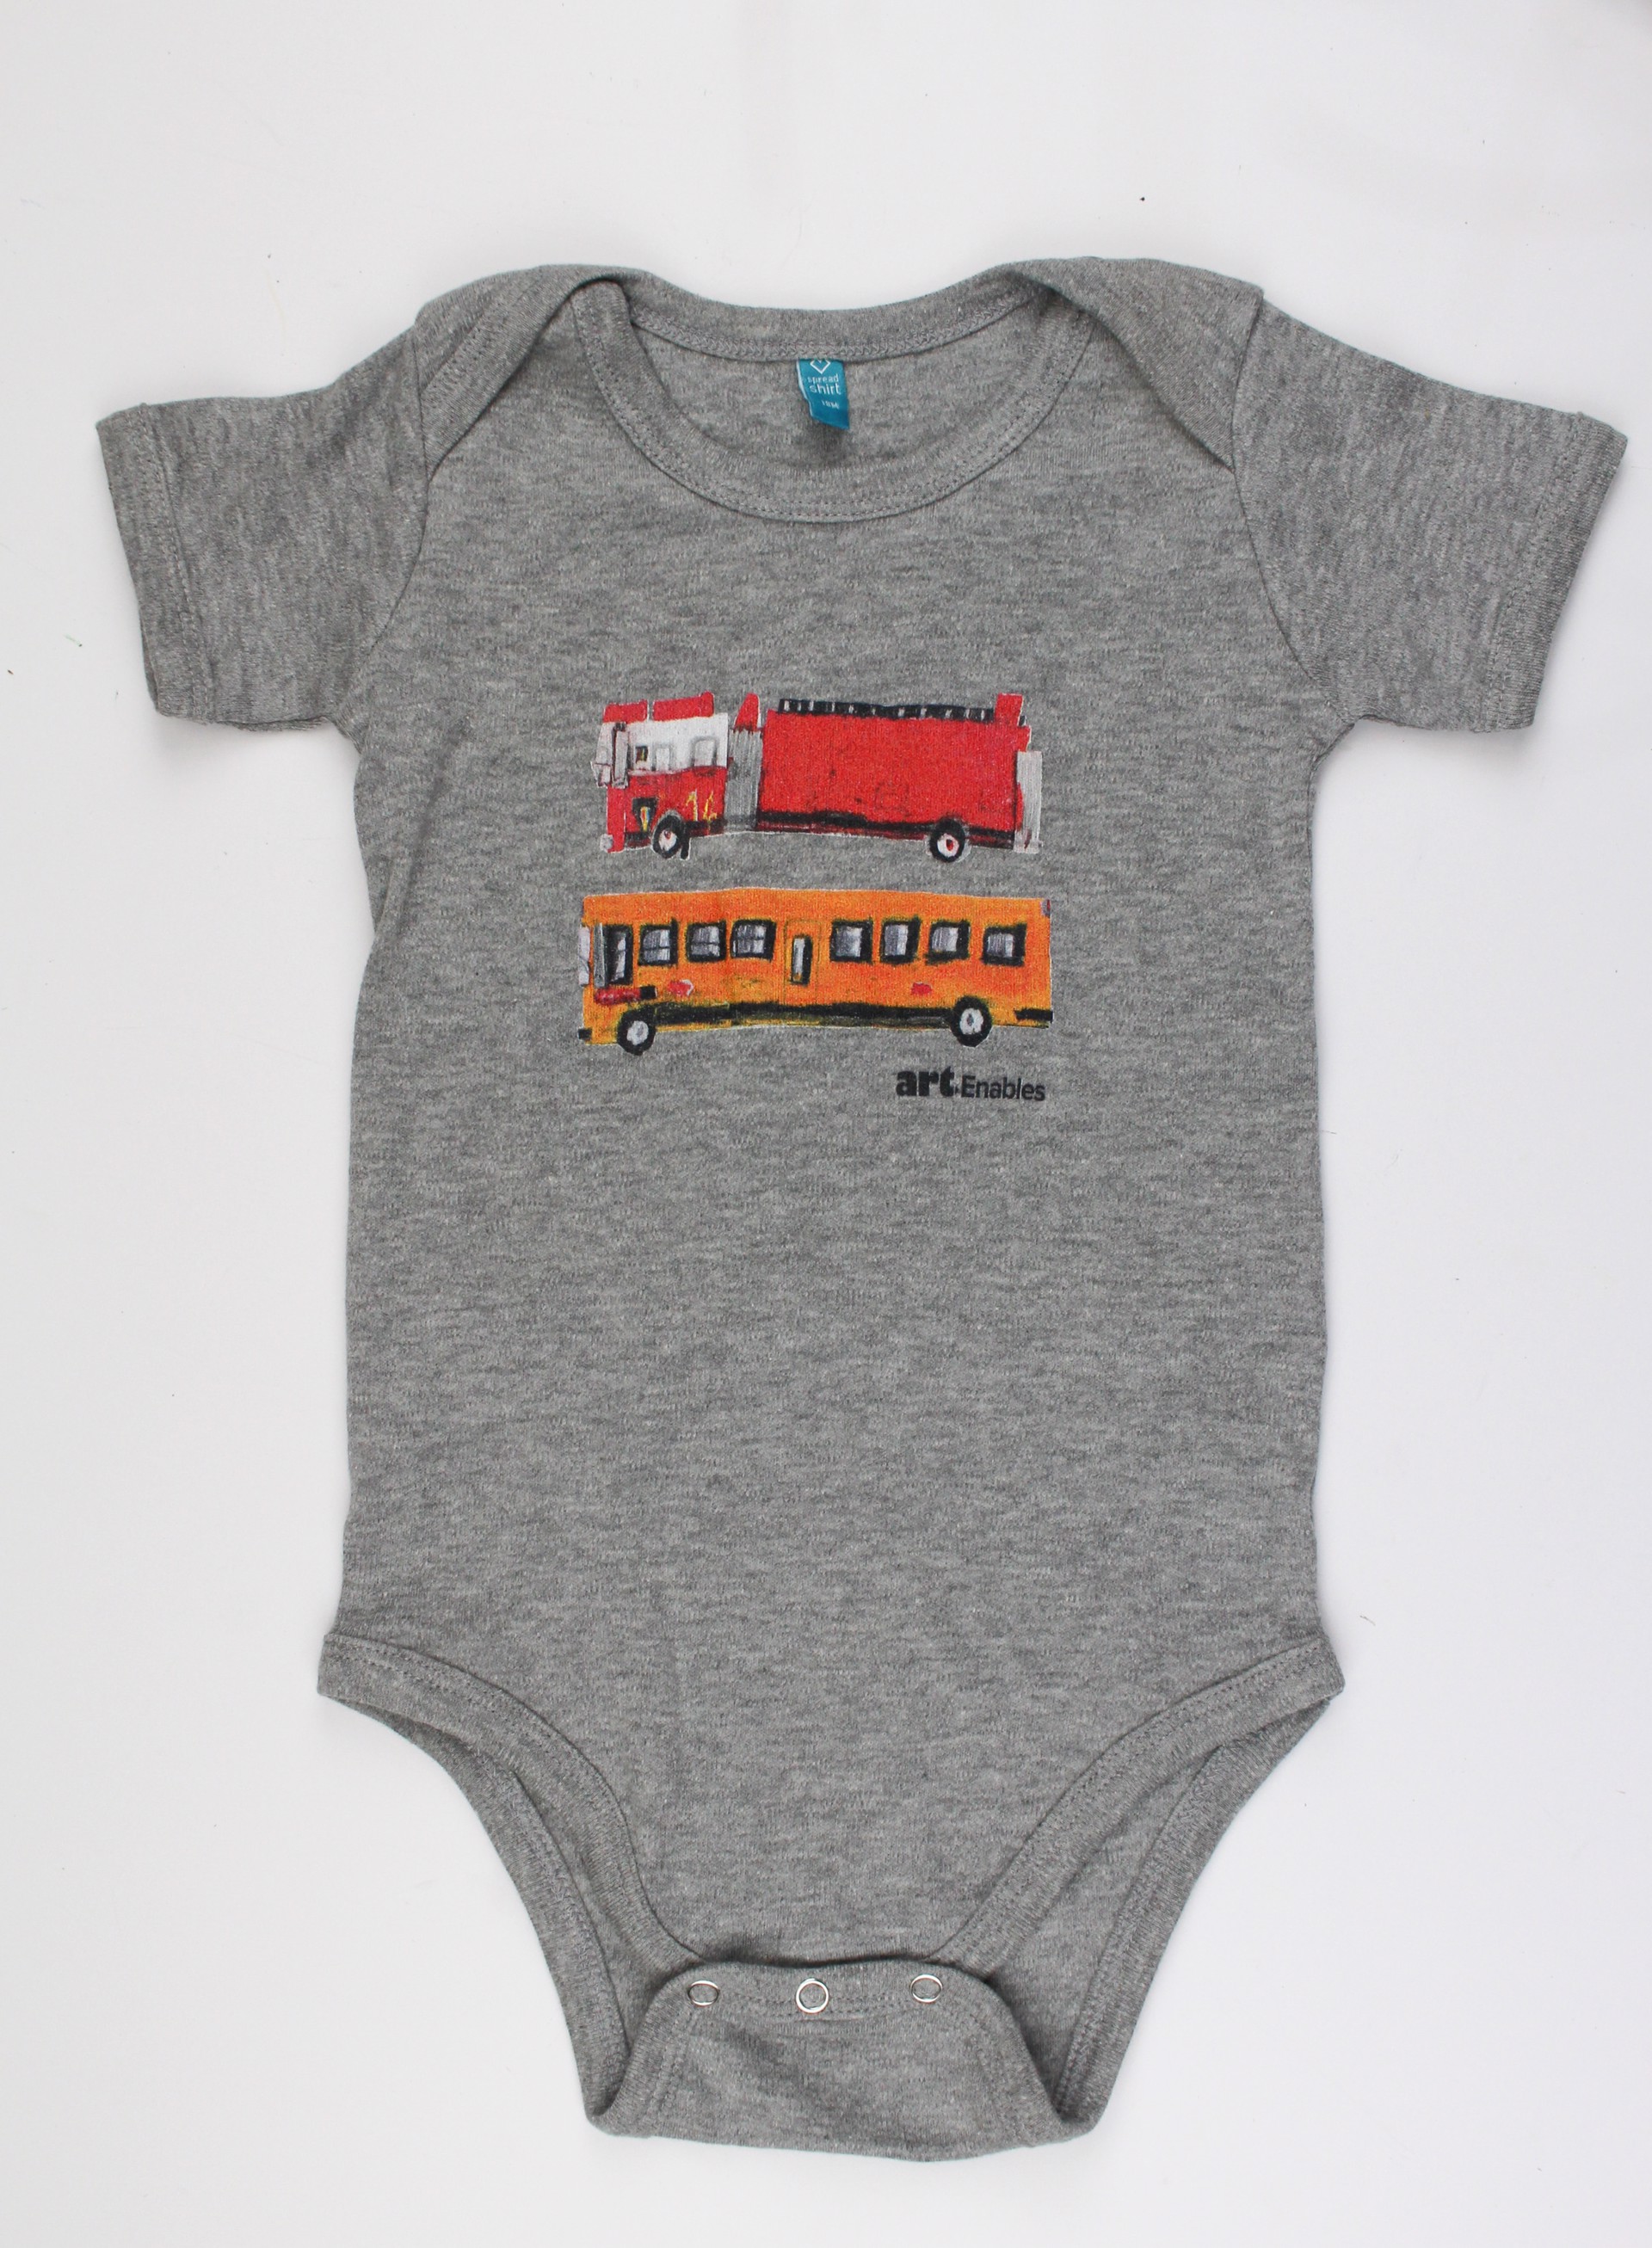 Unisex Baby Onesie - Michael Haynes, 18 months, 2020 by Art Enables Merchandise